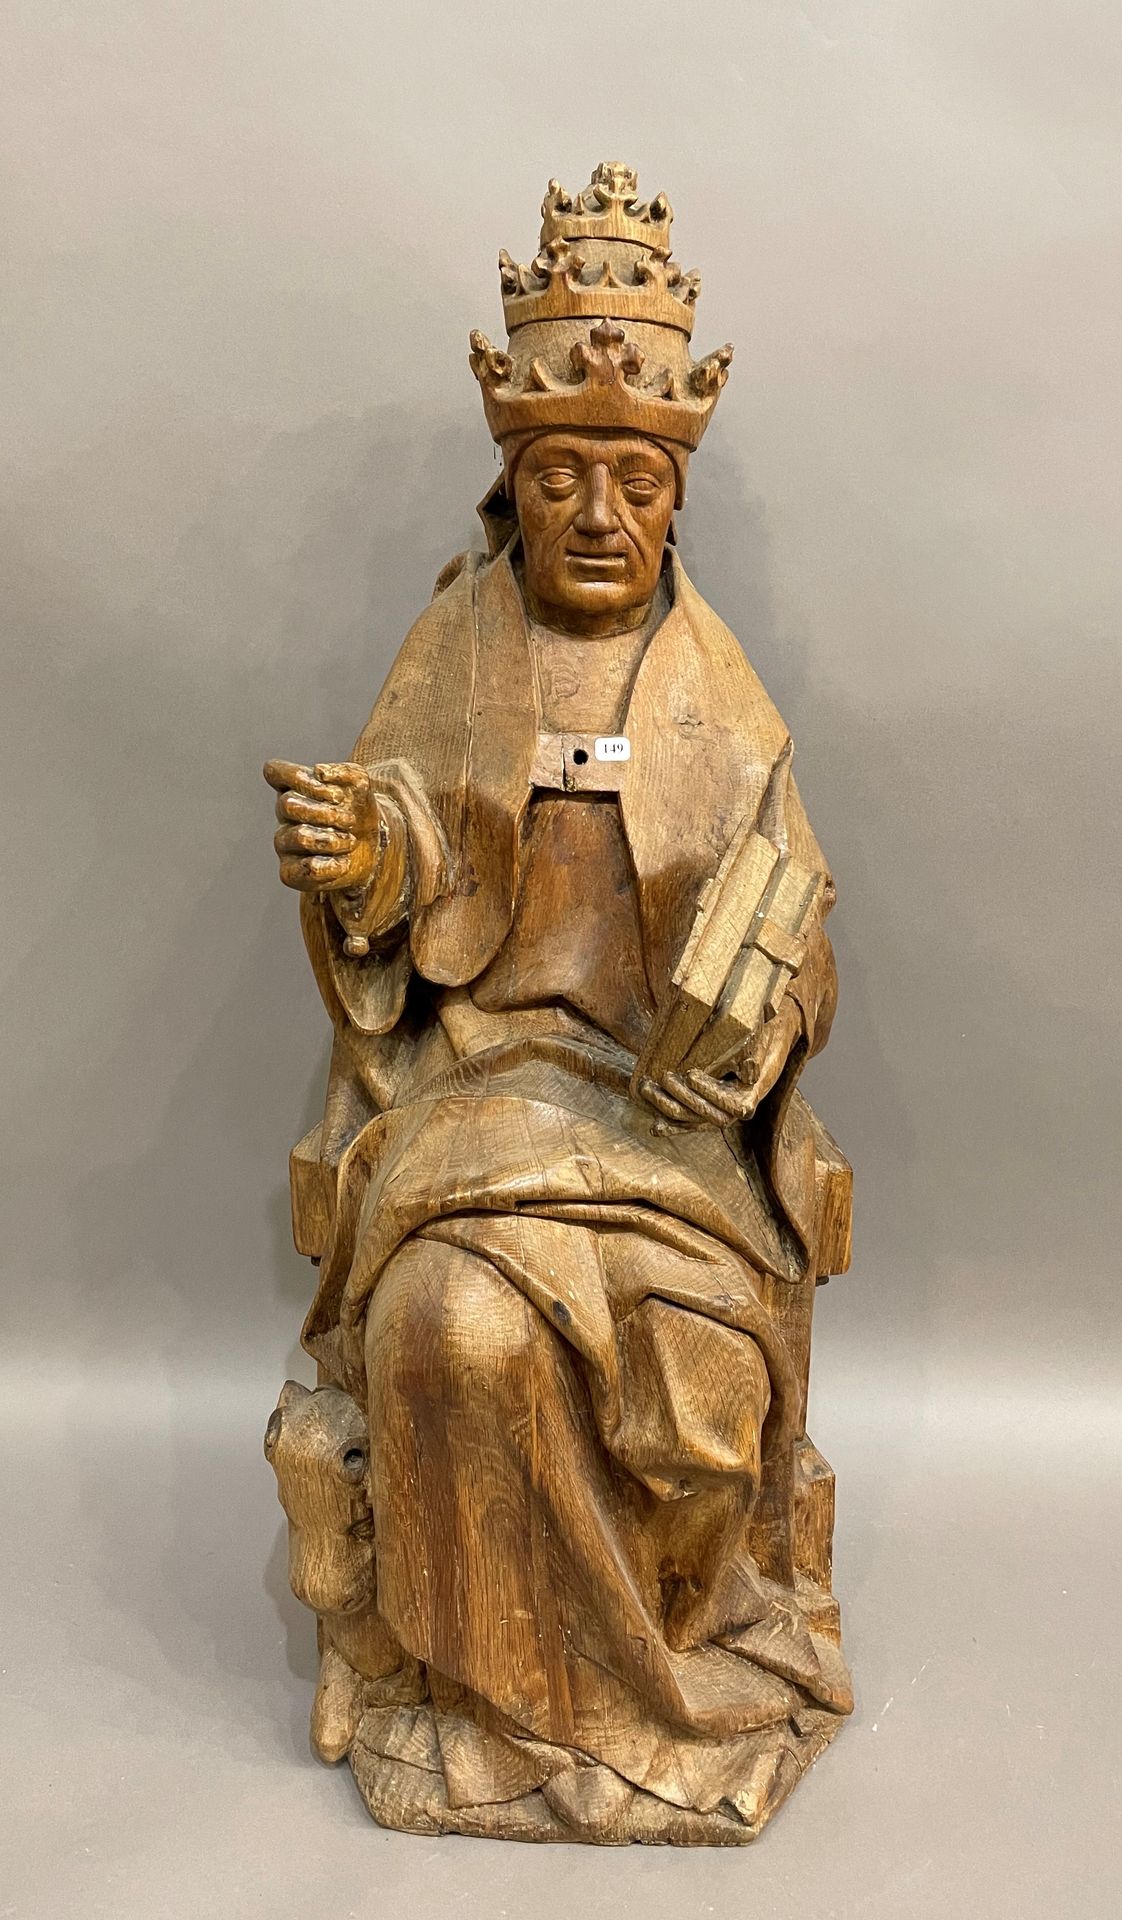 Null 代表 "作为教皇的圣西尔维斯特 "的橡木雕刻雕像--16世纪初的日耳曼作品

H.缺少92厘米